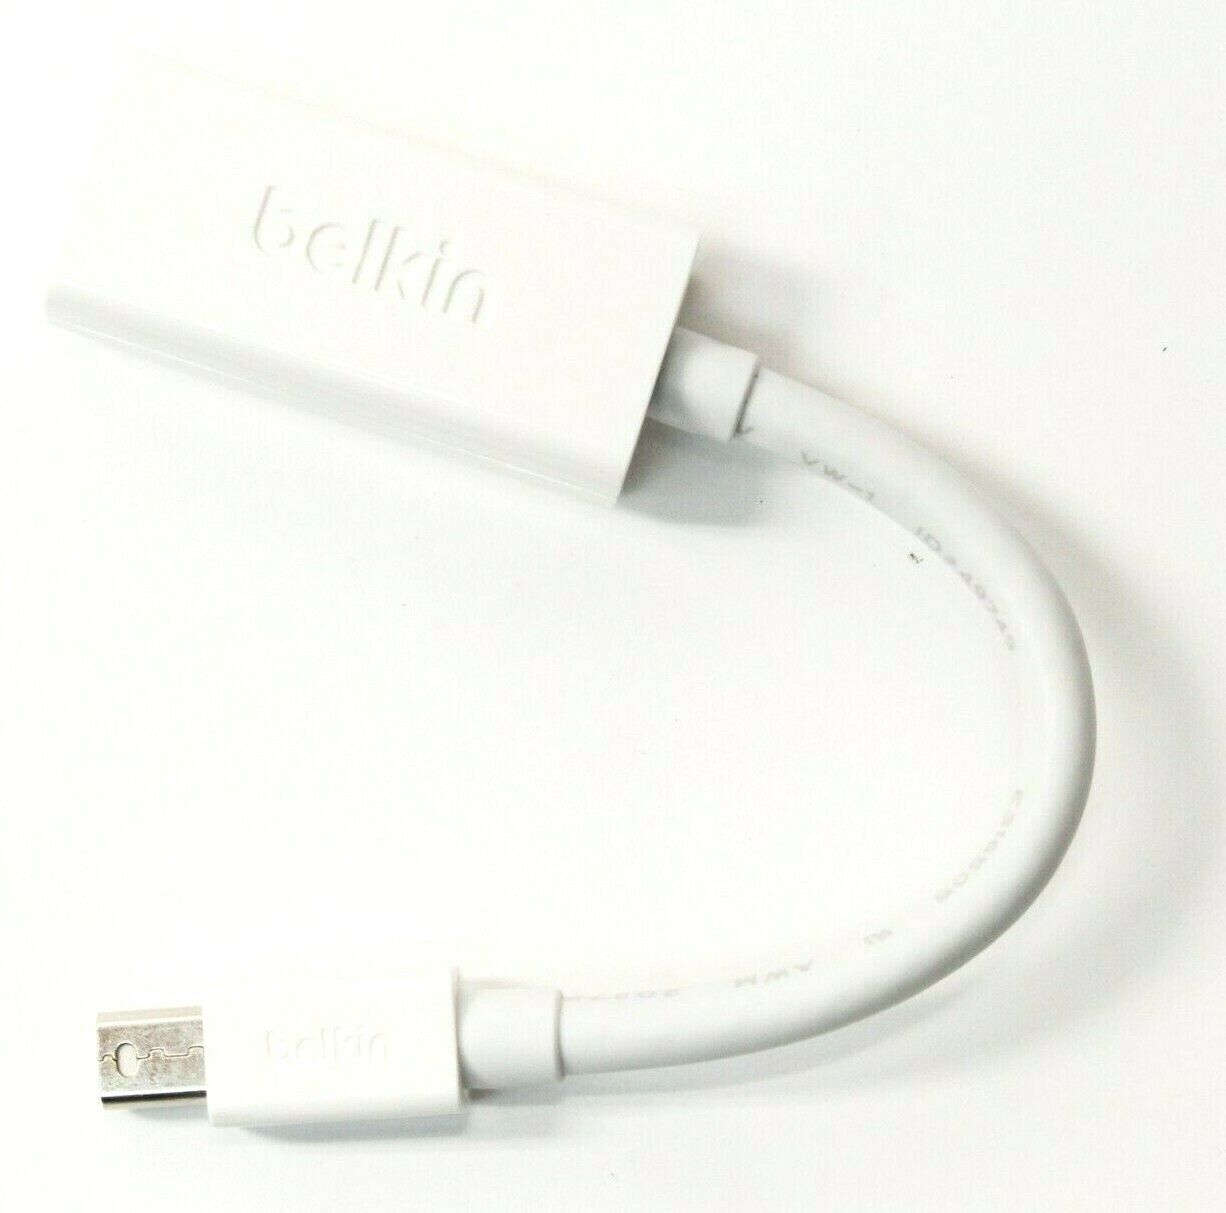 Belkin Mini DisplayPort to HDMI Adapter for Ultrawide High Resolution Monitors